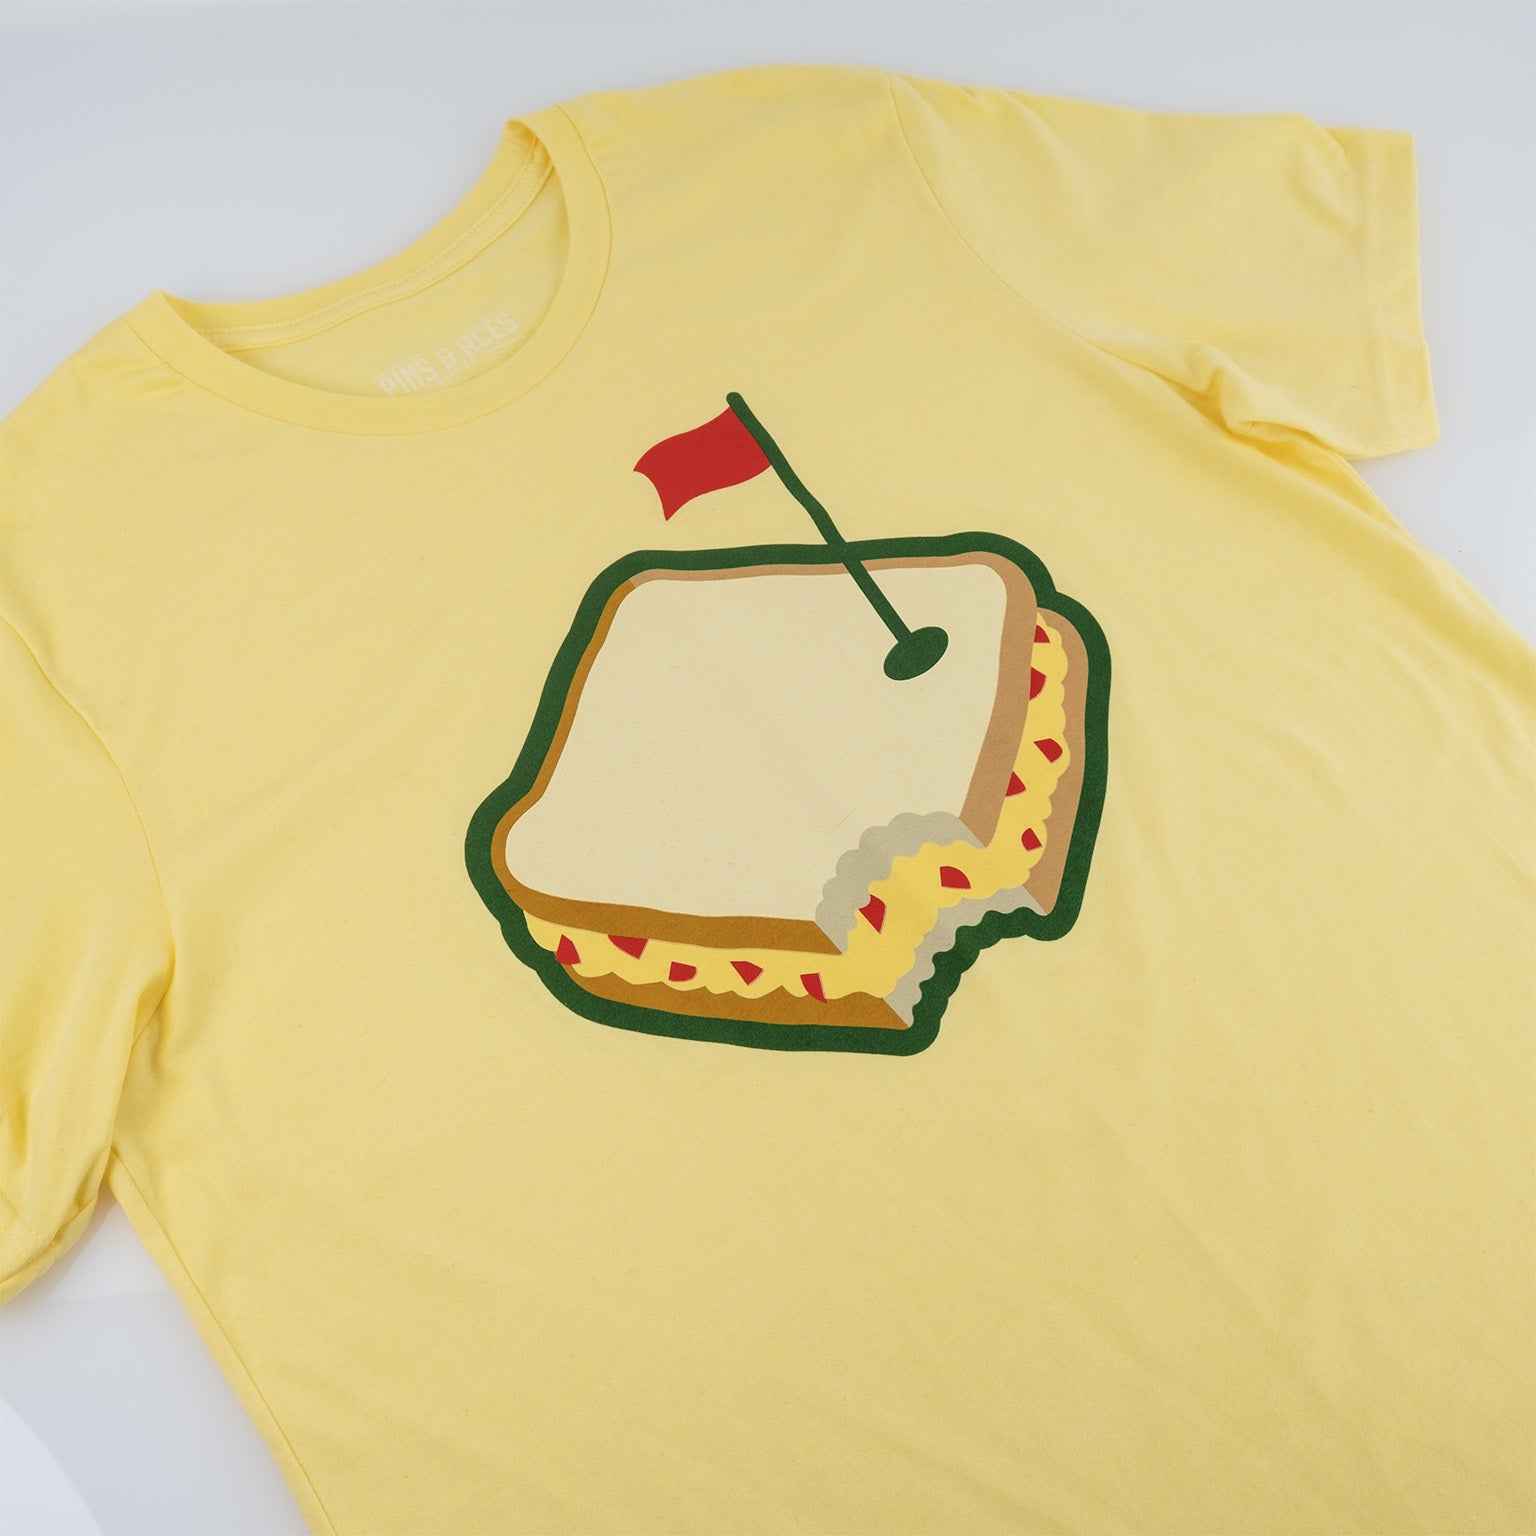 Pimento Cheese Sandwich Logo T-Shirt